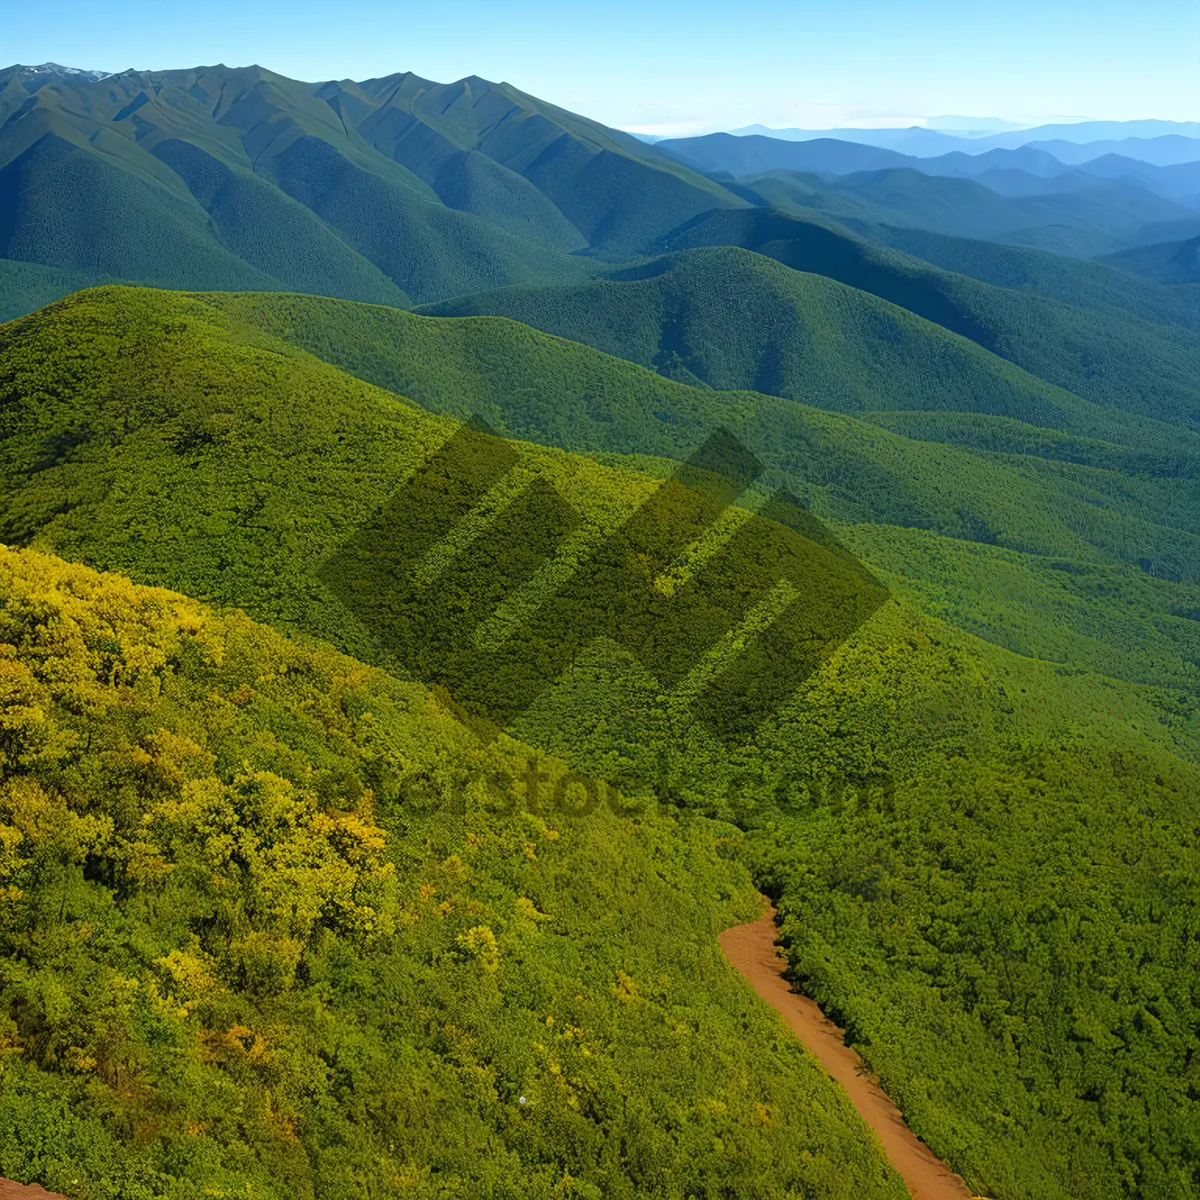 Picture of Idyllic Highland Range Overlooking Scenic Valley